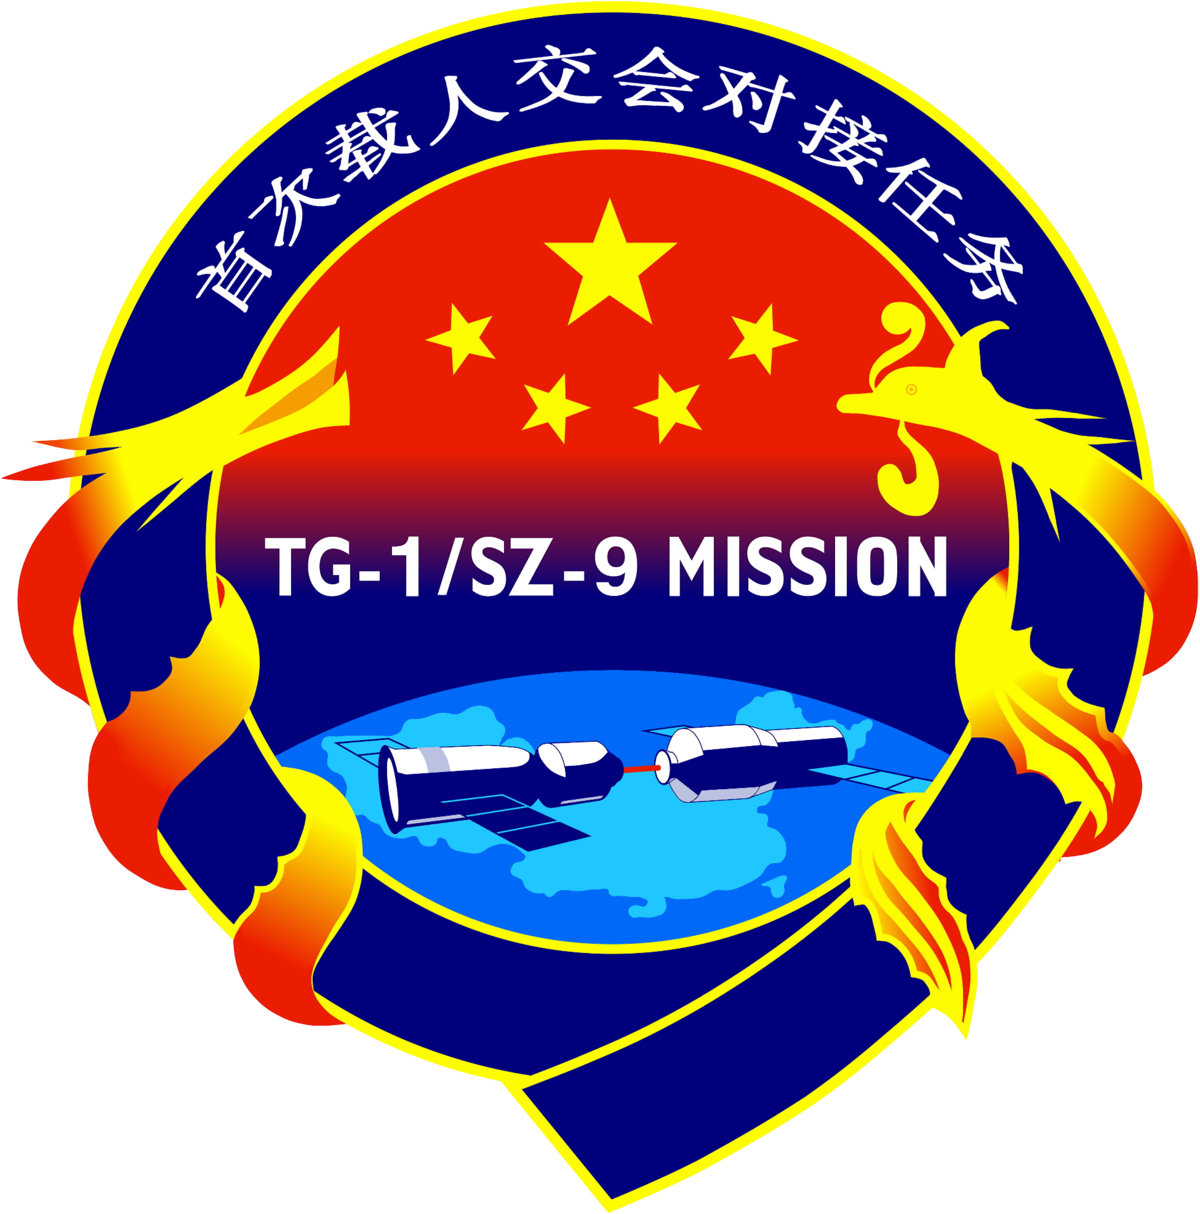 Shenzhou 9 Mission, First Chinese Manned Spacecraft - Shenzhou (1200x1214)